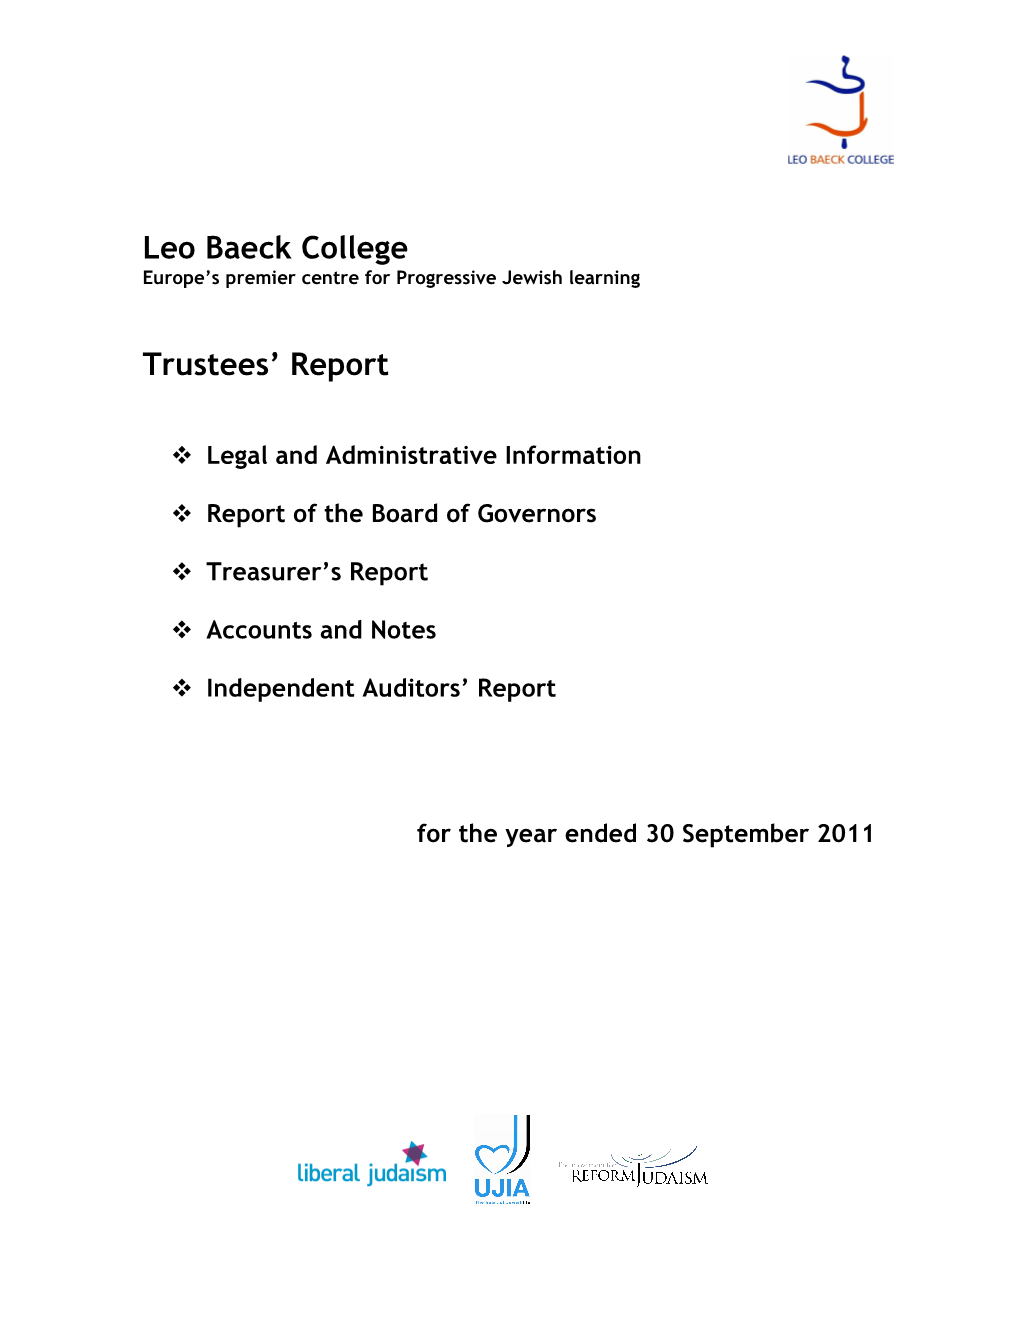 [Trustees Report 2011.12.02.20.FINAL]